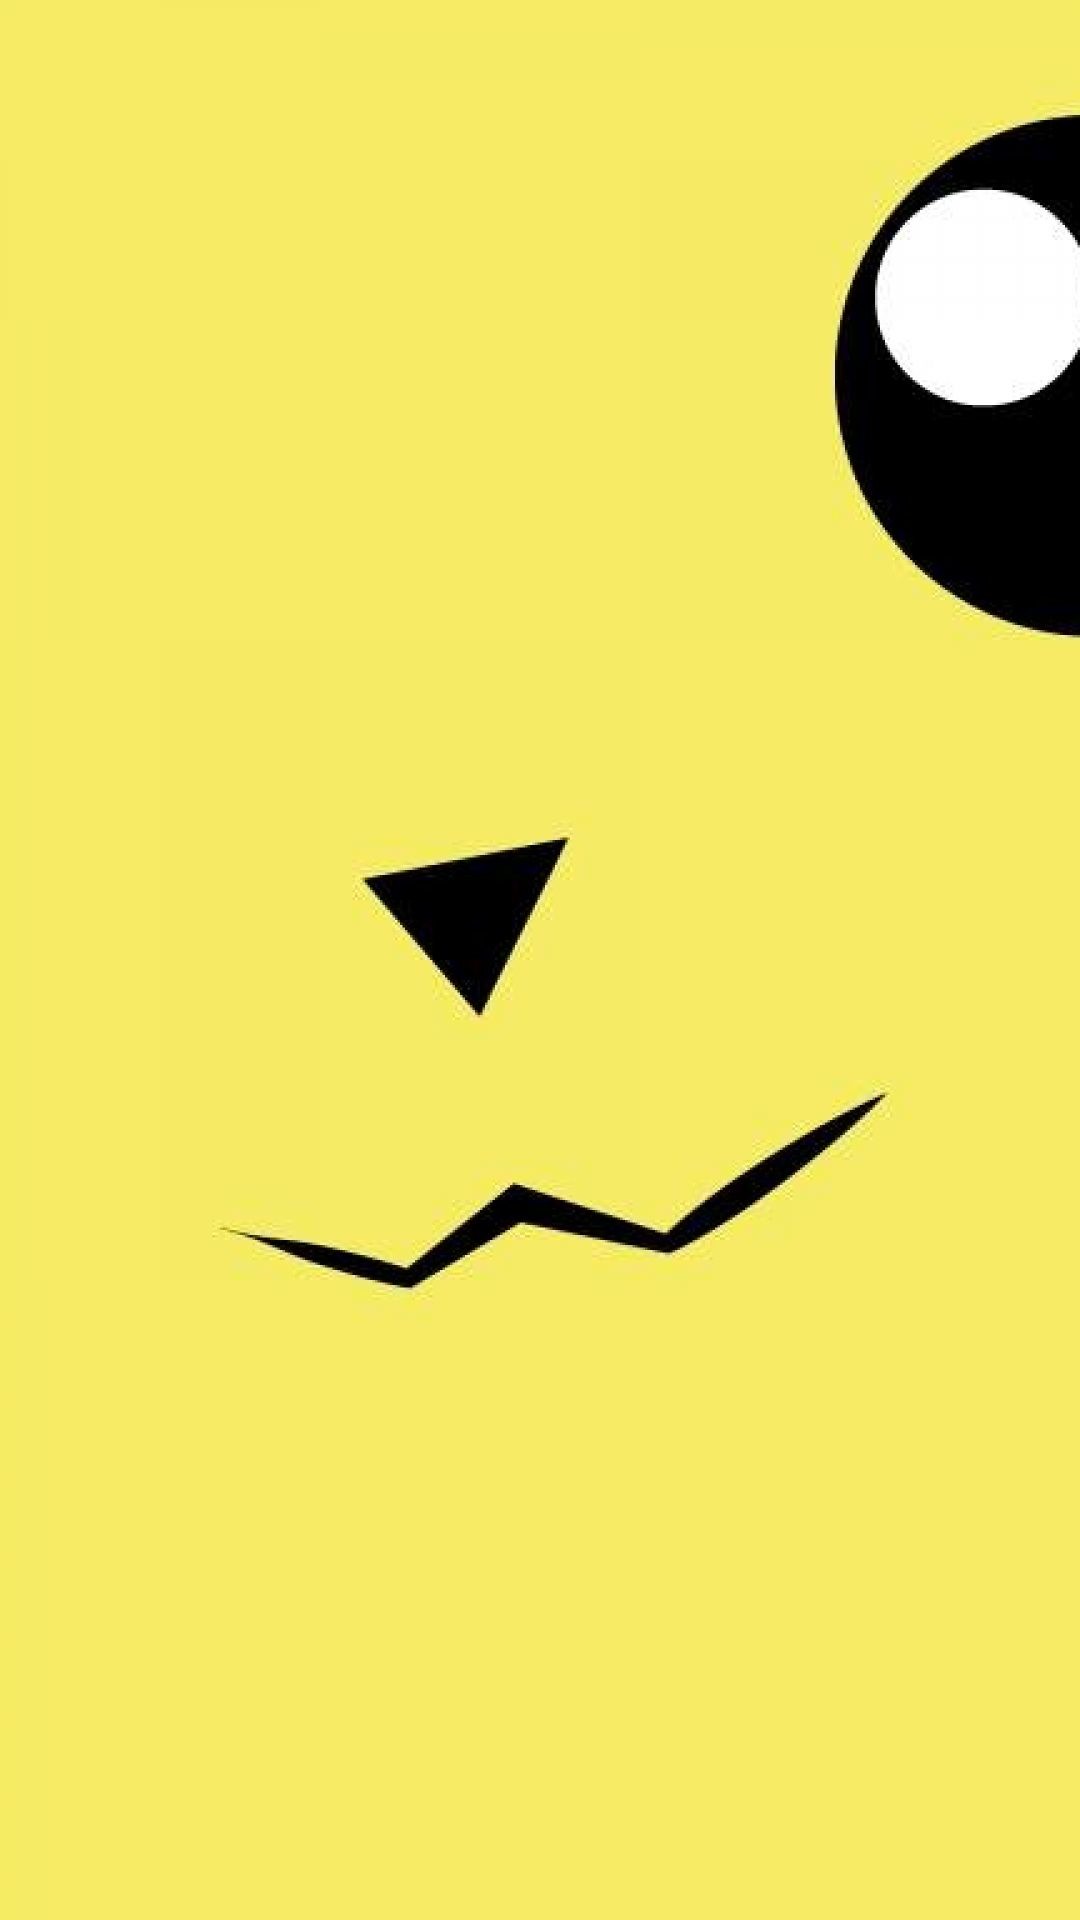 Wallpaper de pikachu hd